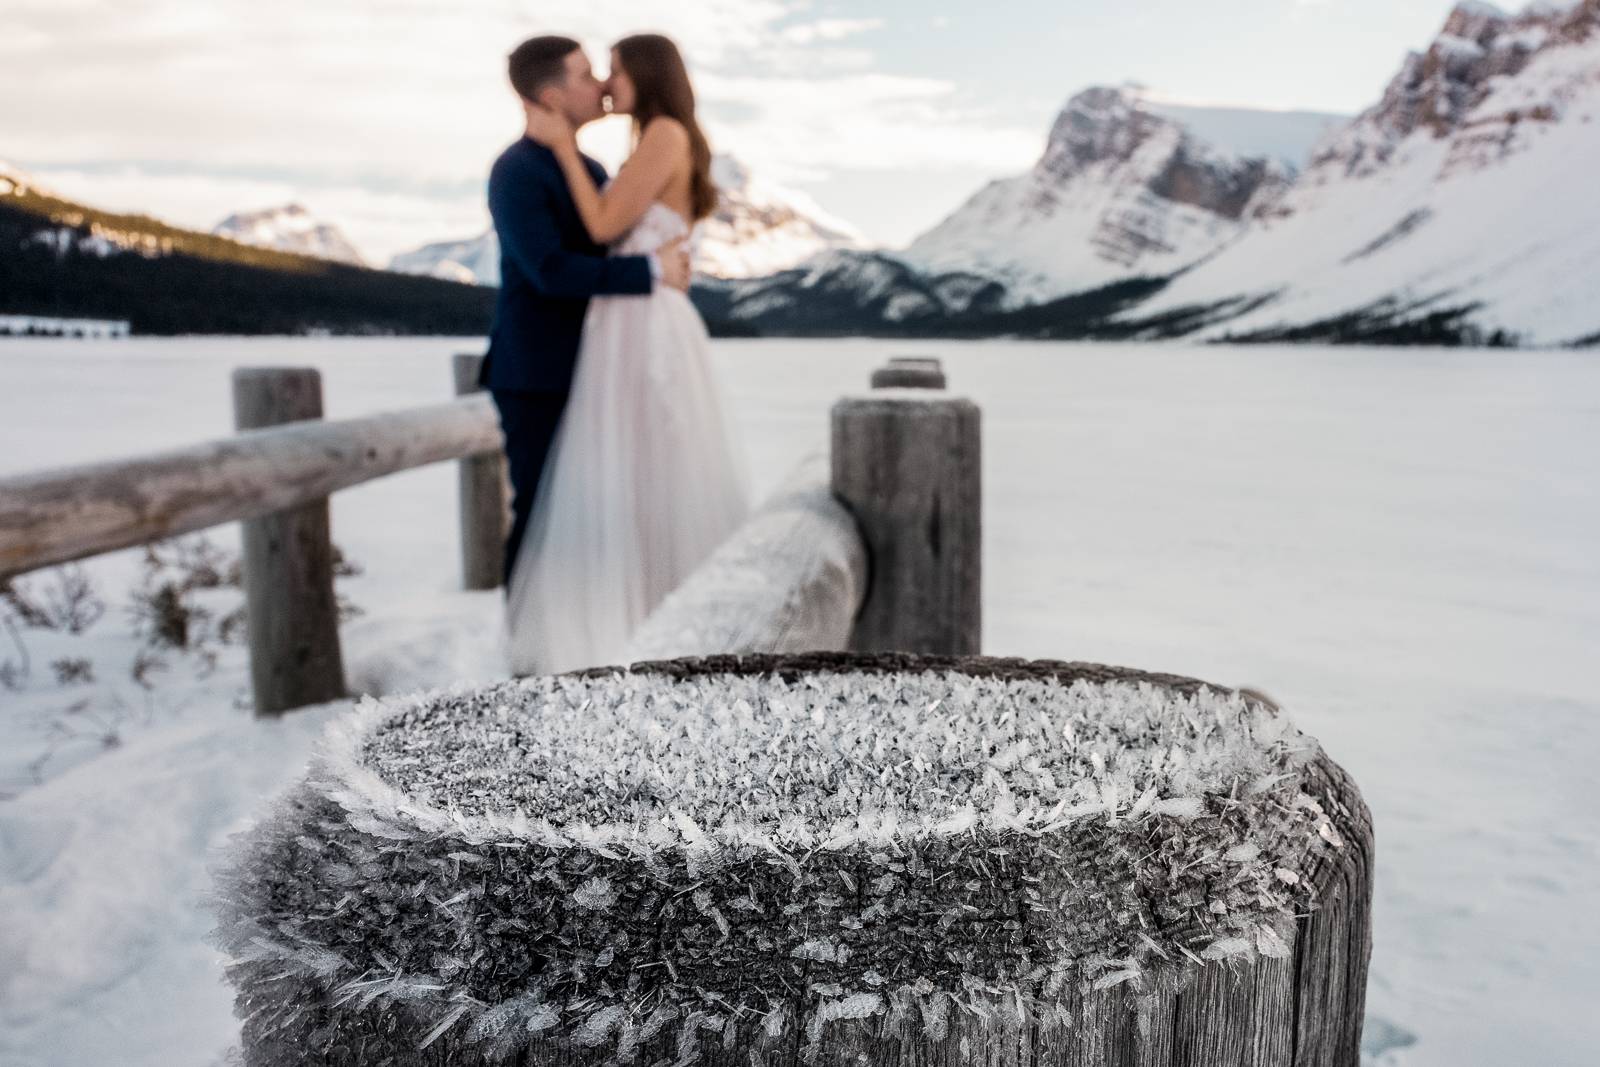 Winter elopement photography